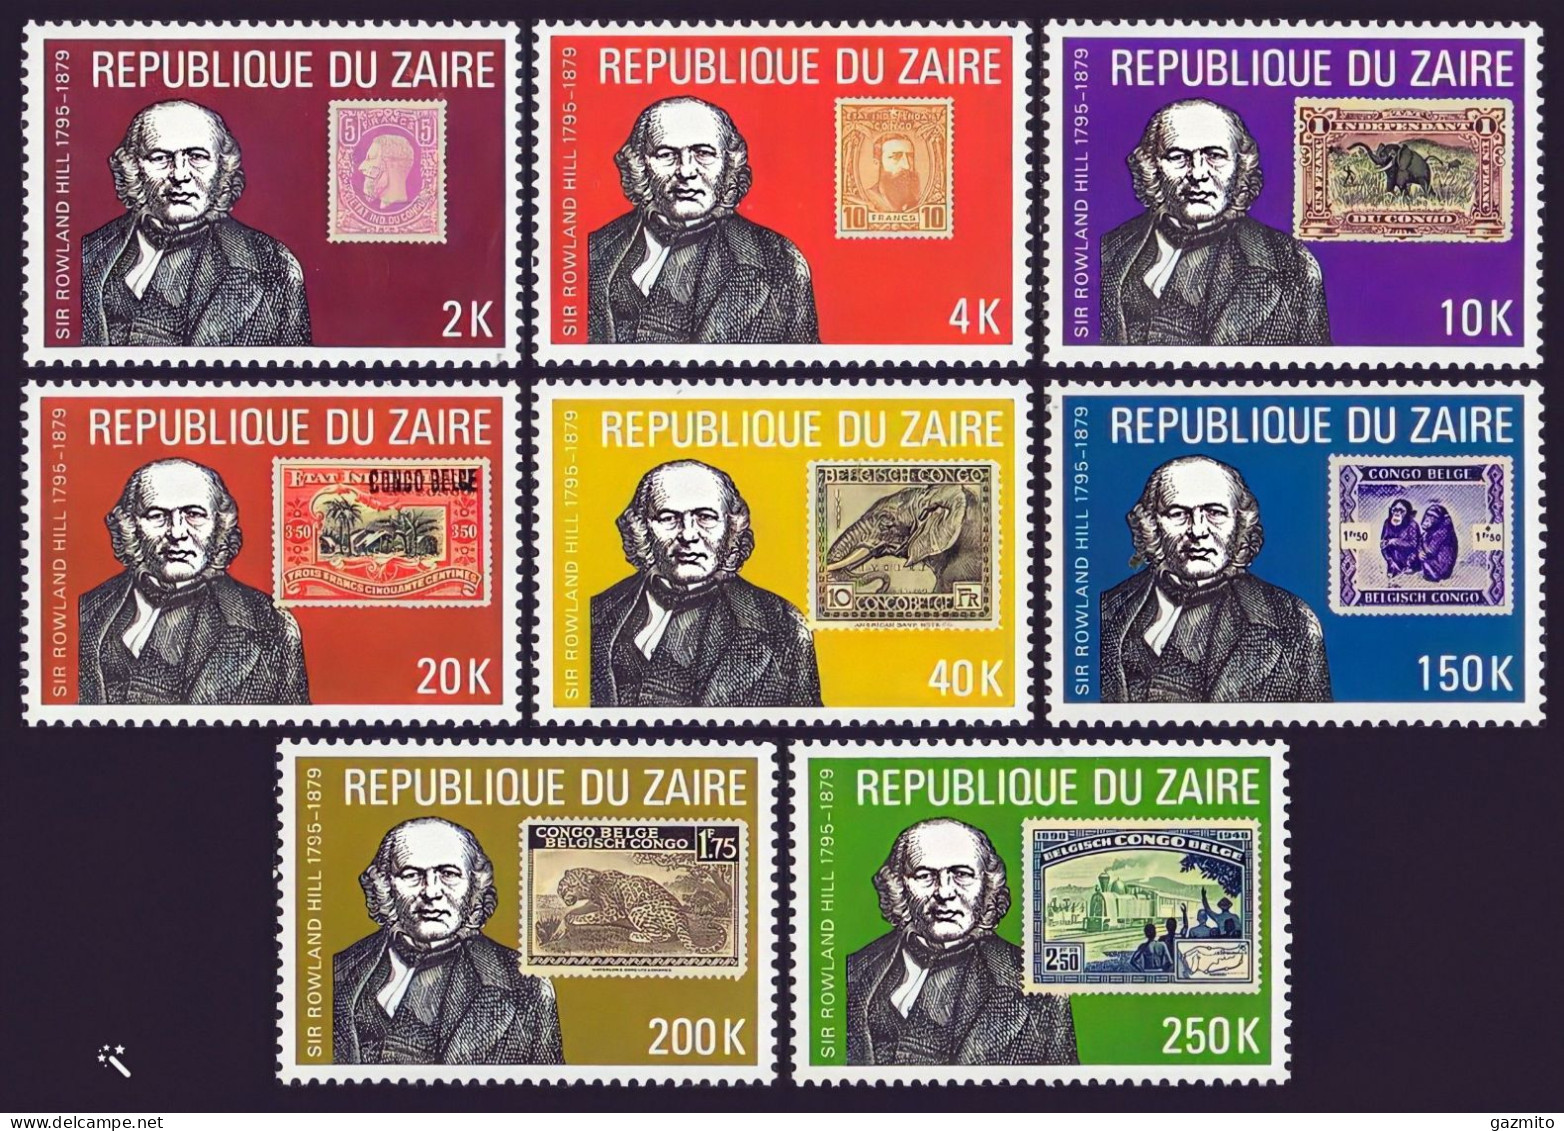 Zaire 1980, Rowland Hill, Stamp On Stamp, Wild Cat, Monkey, Elephant, 8val - Mono